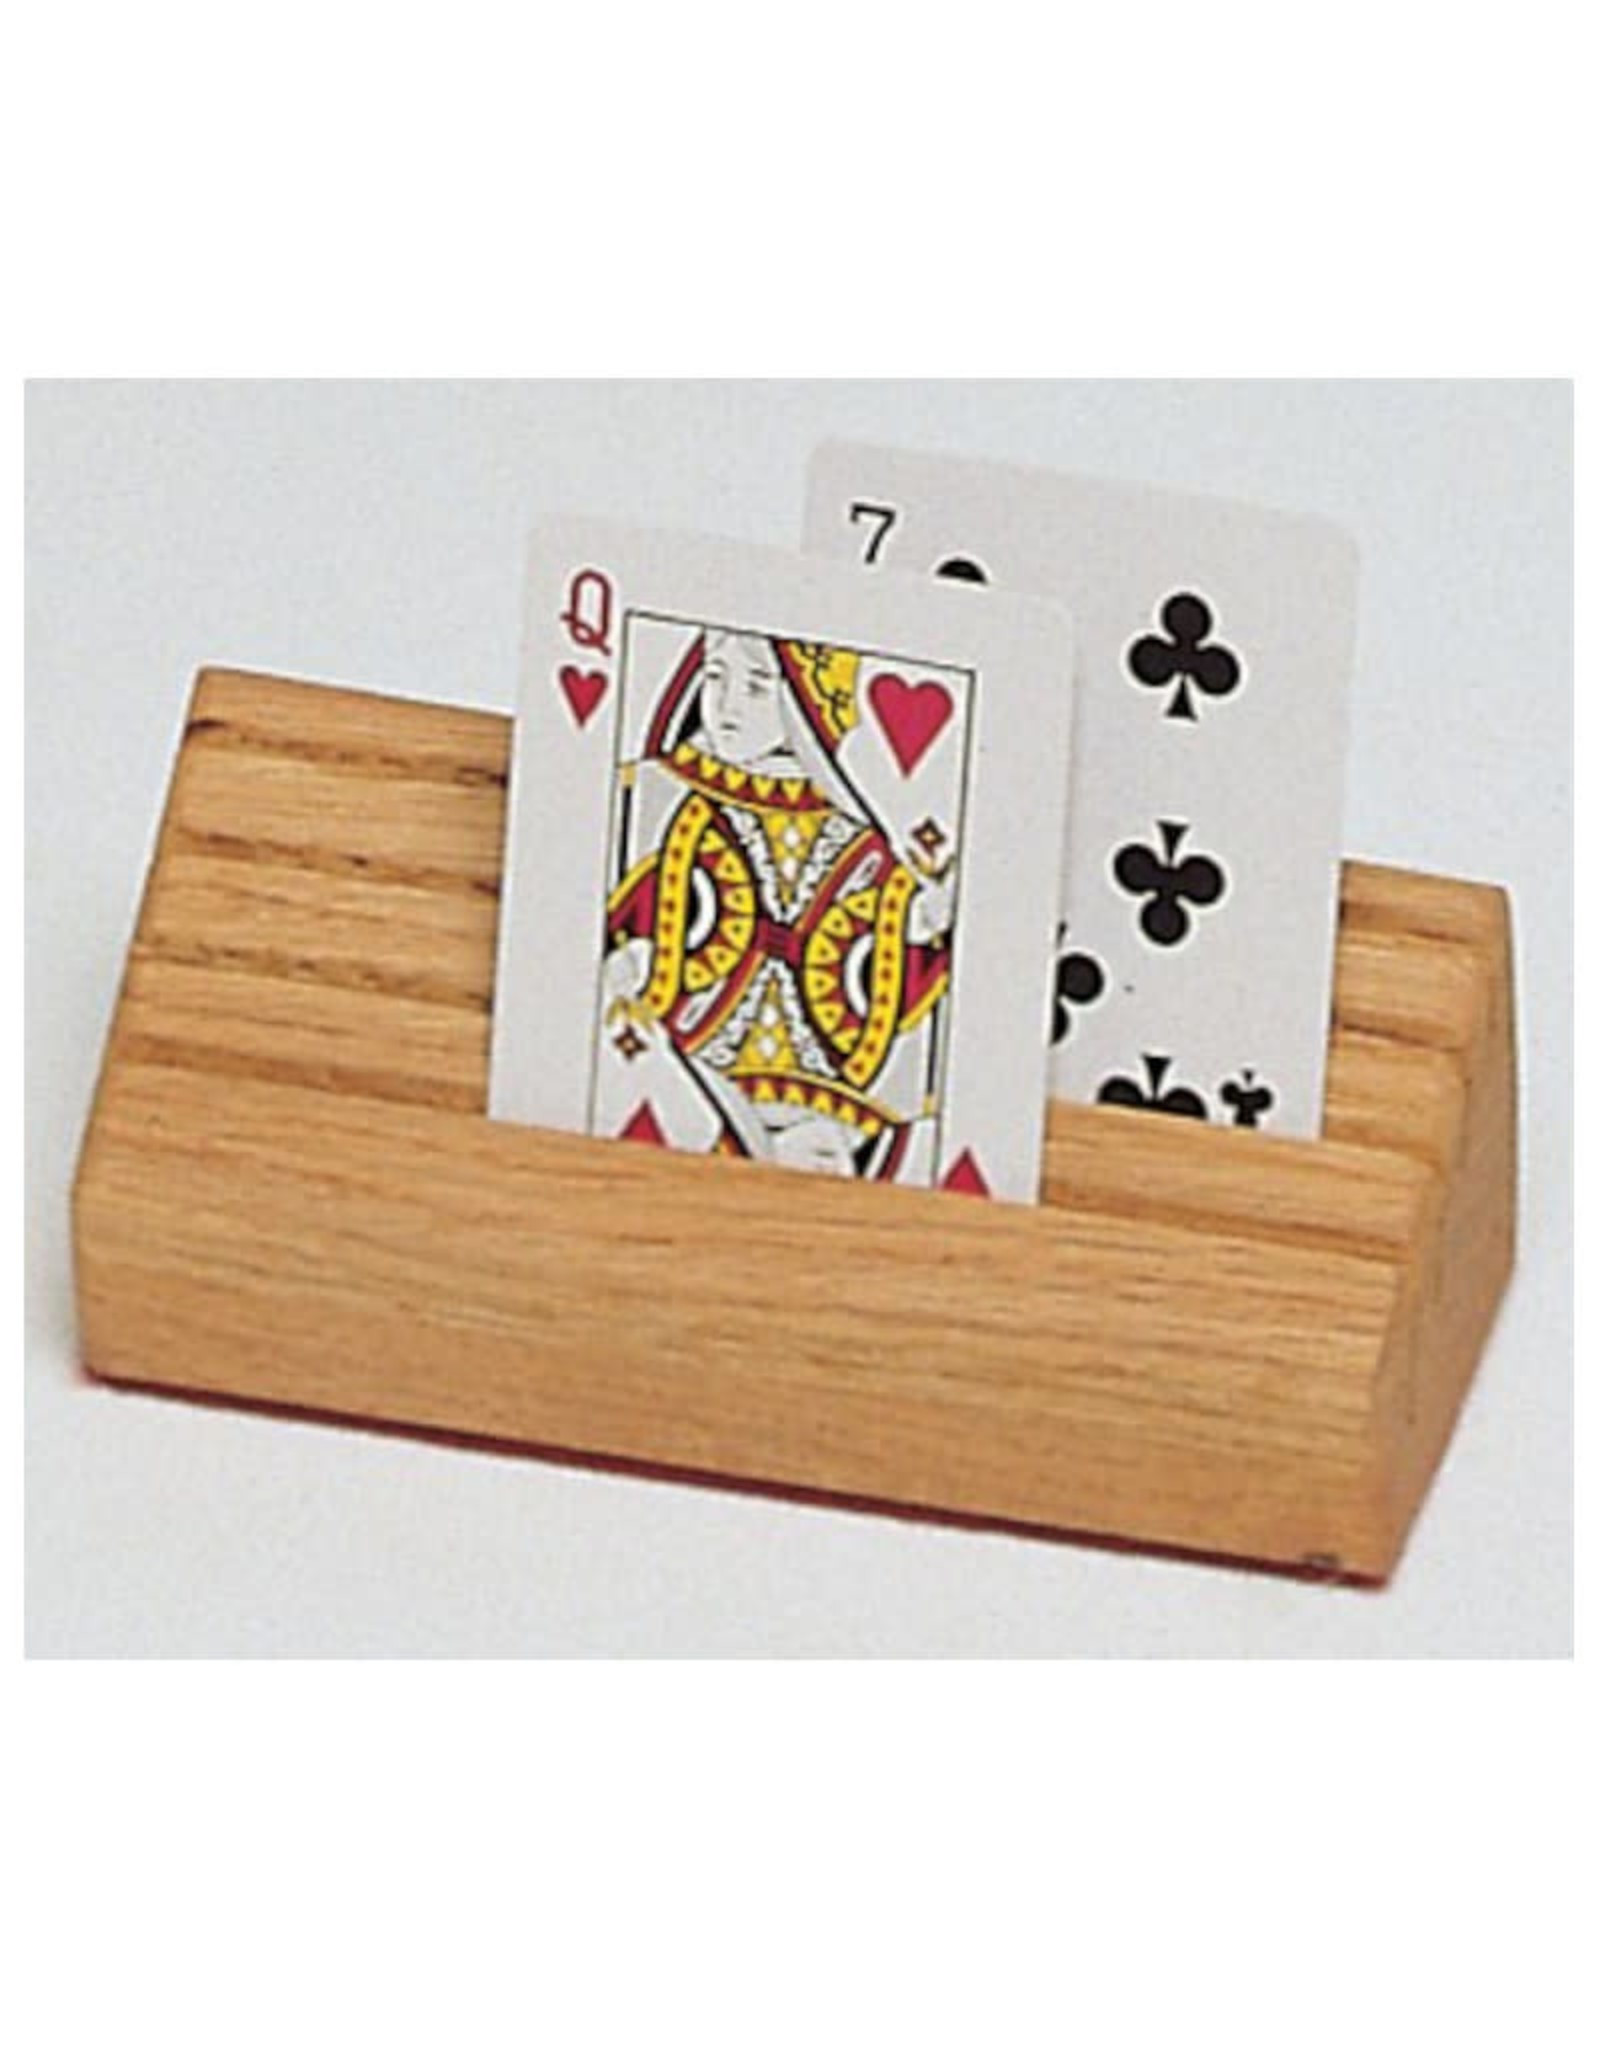 Card Holder Wooden